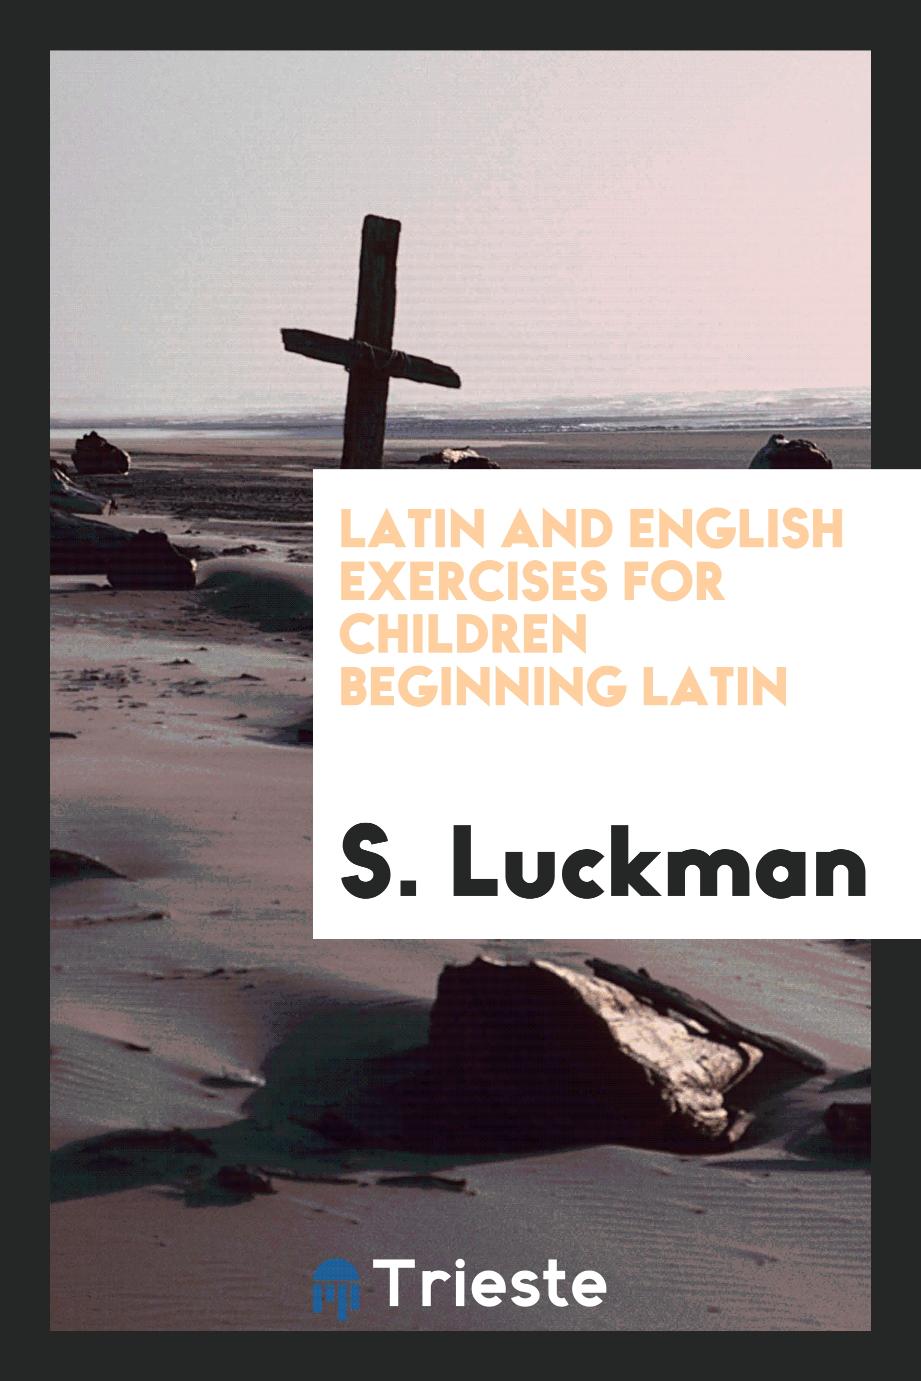 Latin and English exercises for children beginning Latin